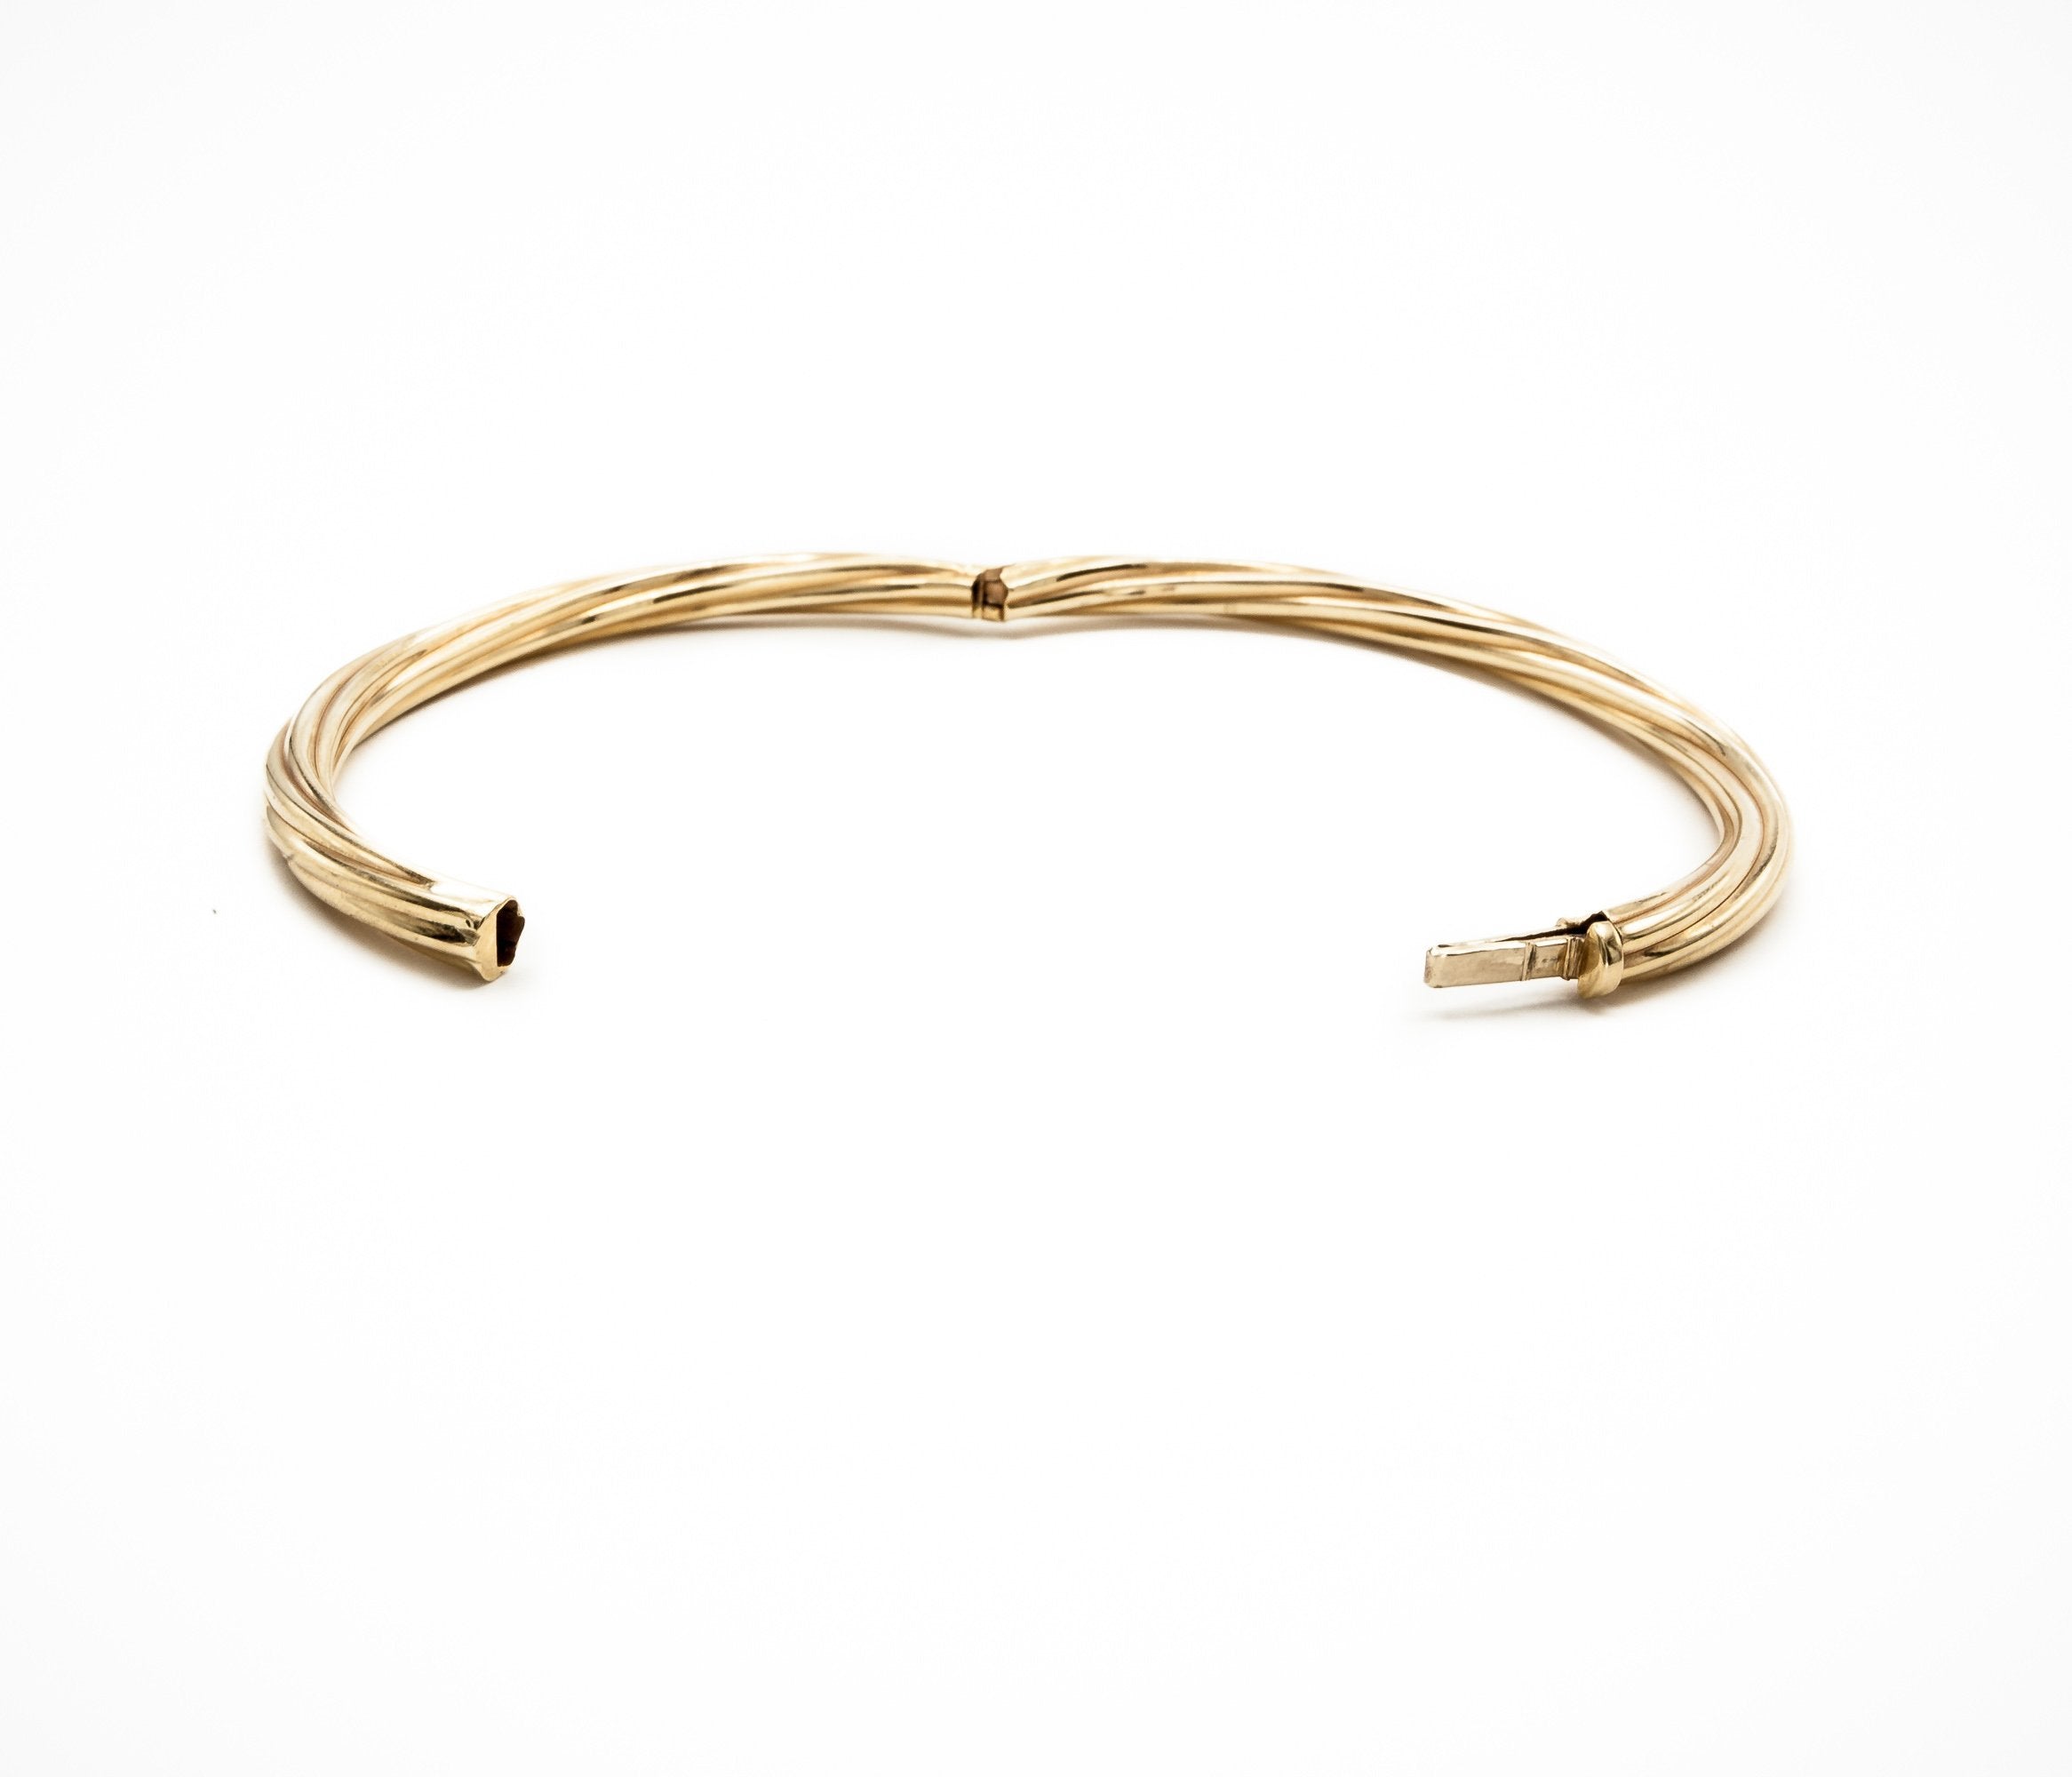 Buy Children Jewelry 18k Gold Plated Bangle Bracelet for Toddlers Gift Safe  Easy Adjustable 4.7